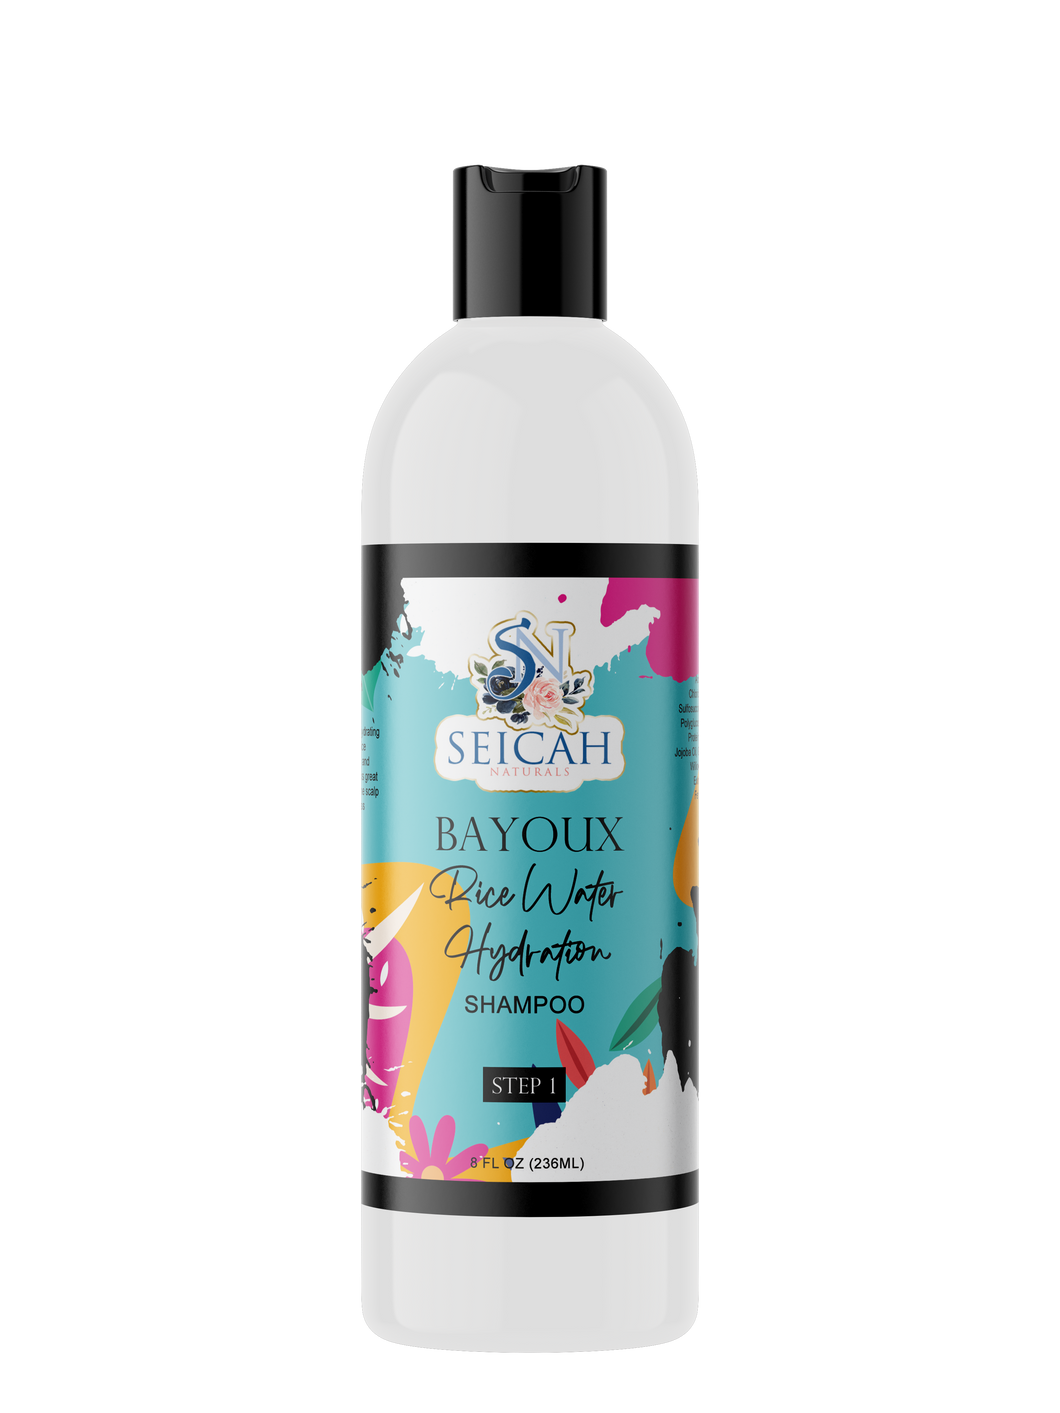 BaYOUX Rice Water Hydration Shampoo-32oz